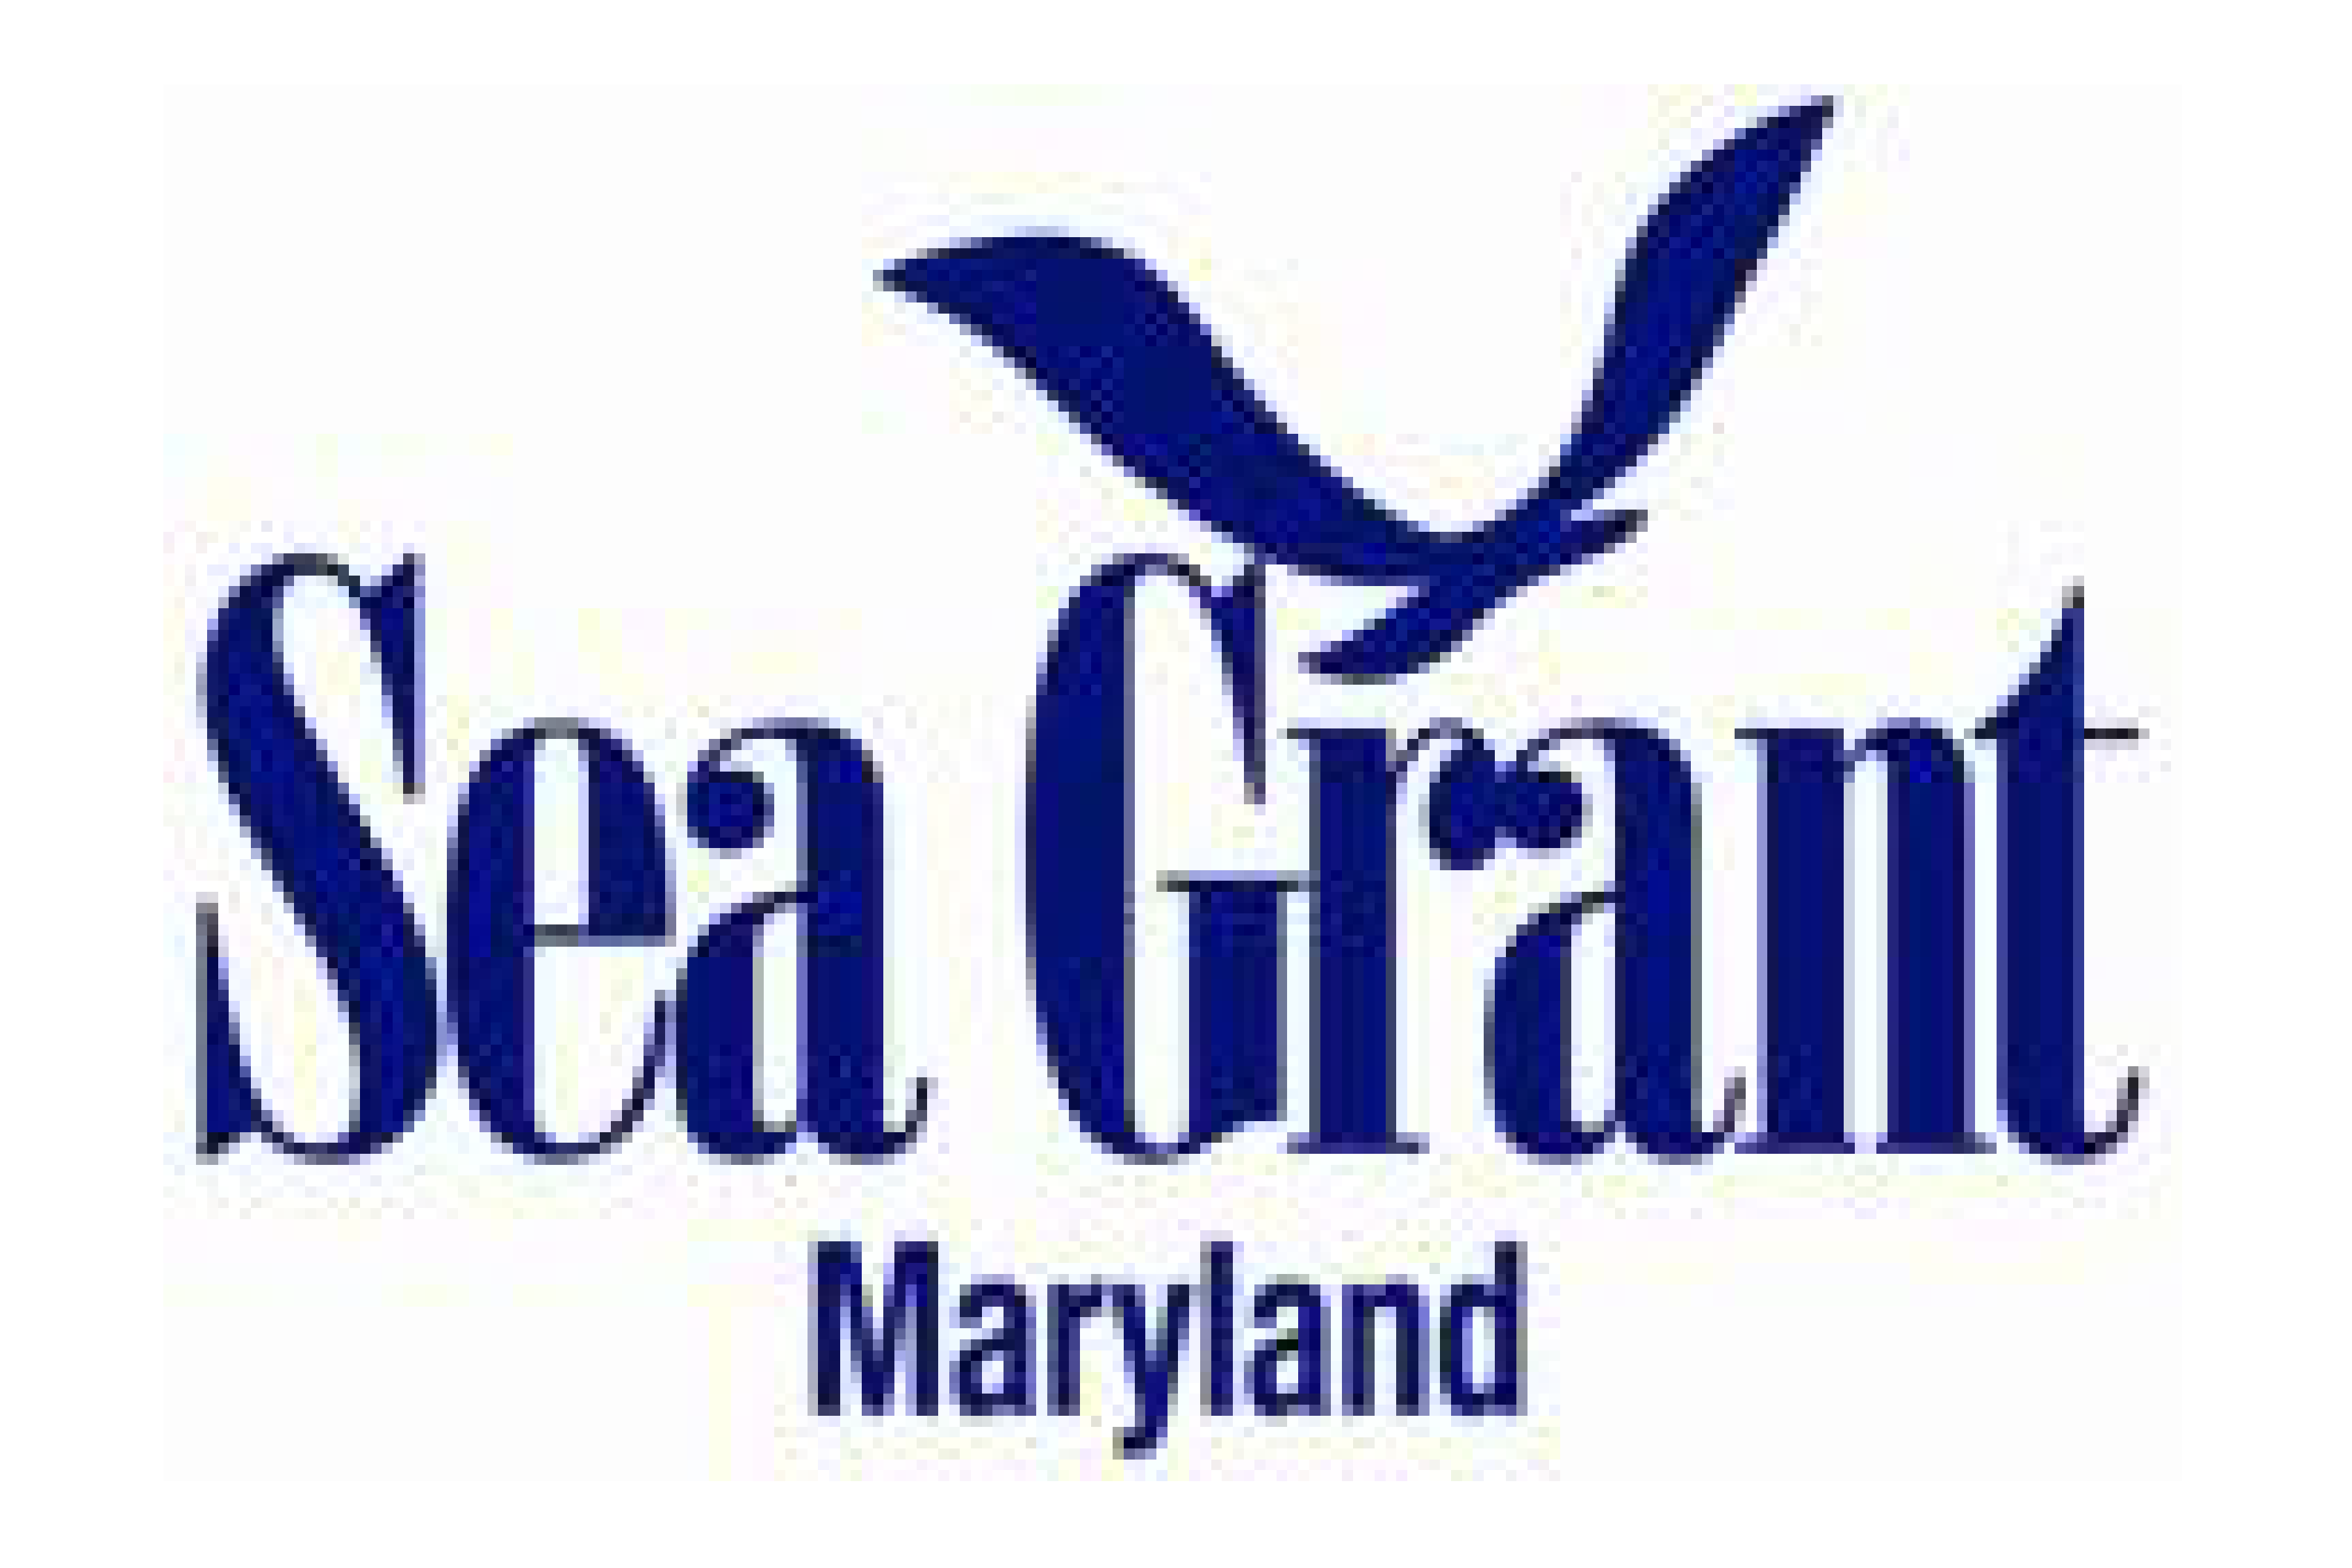 Maryland Sea Grant